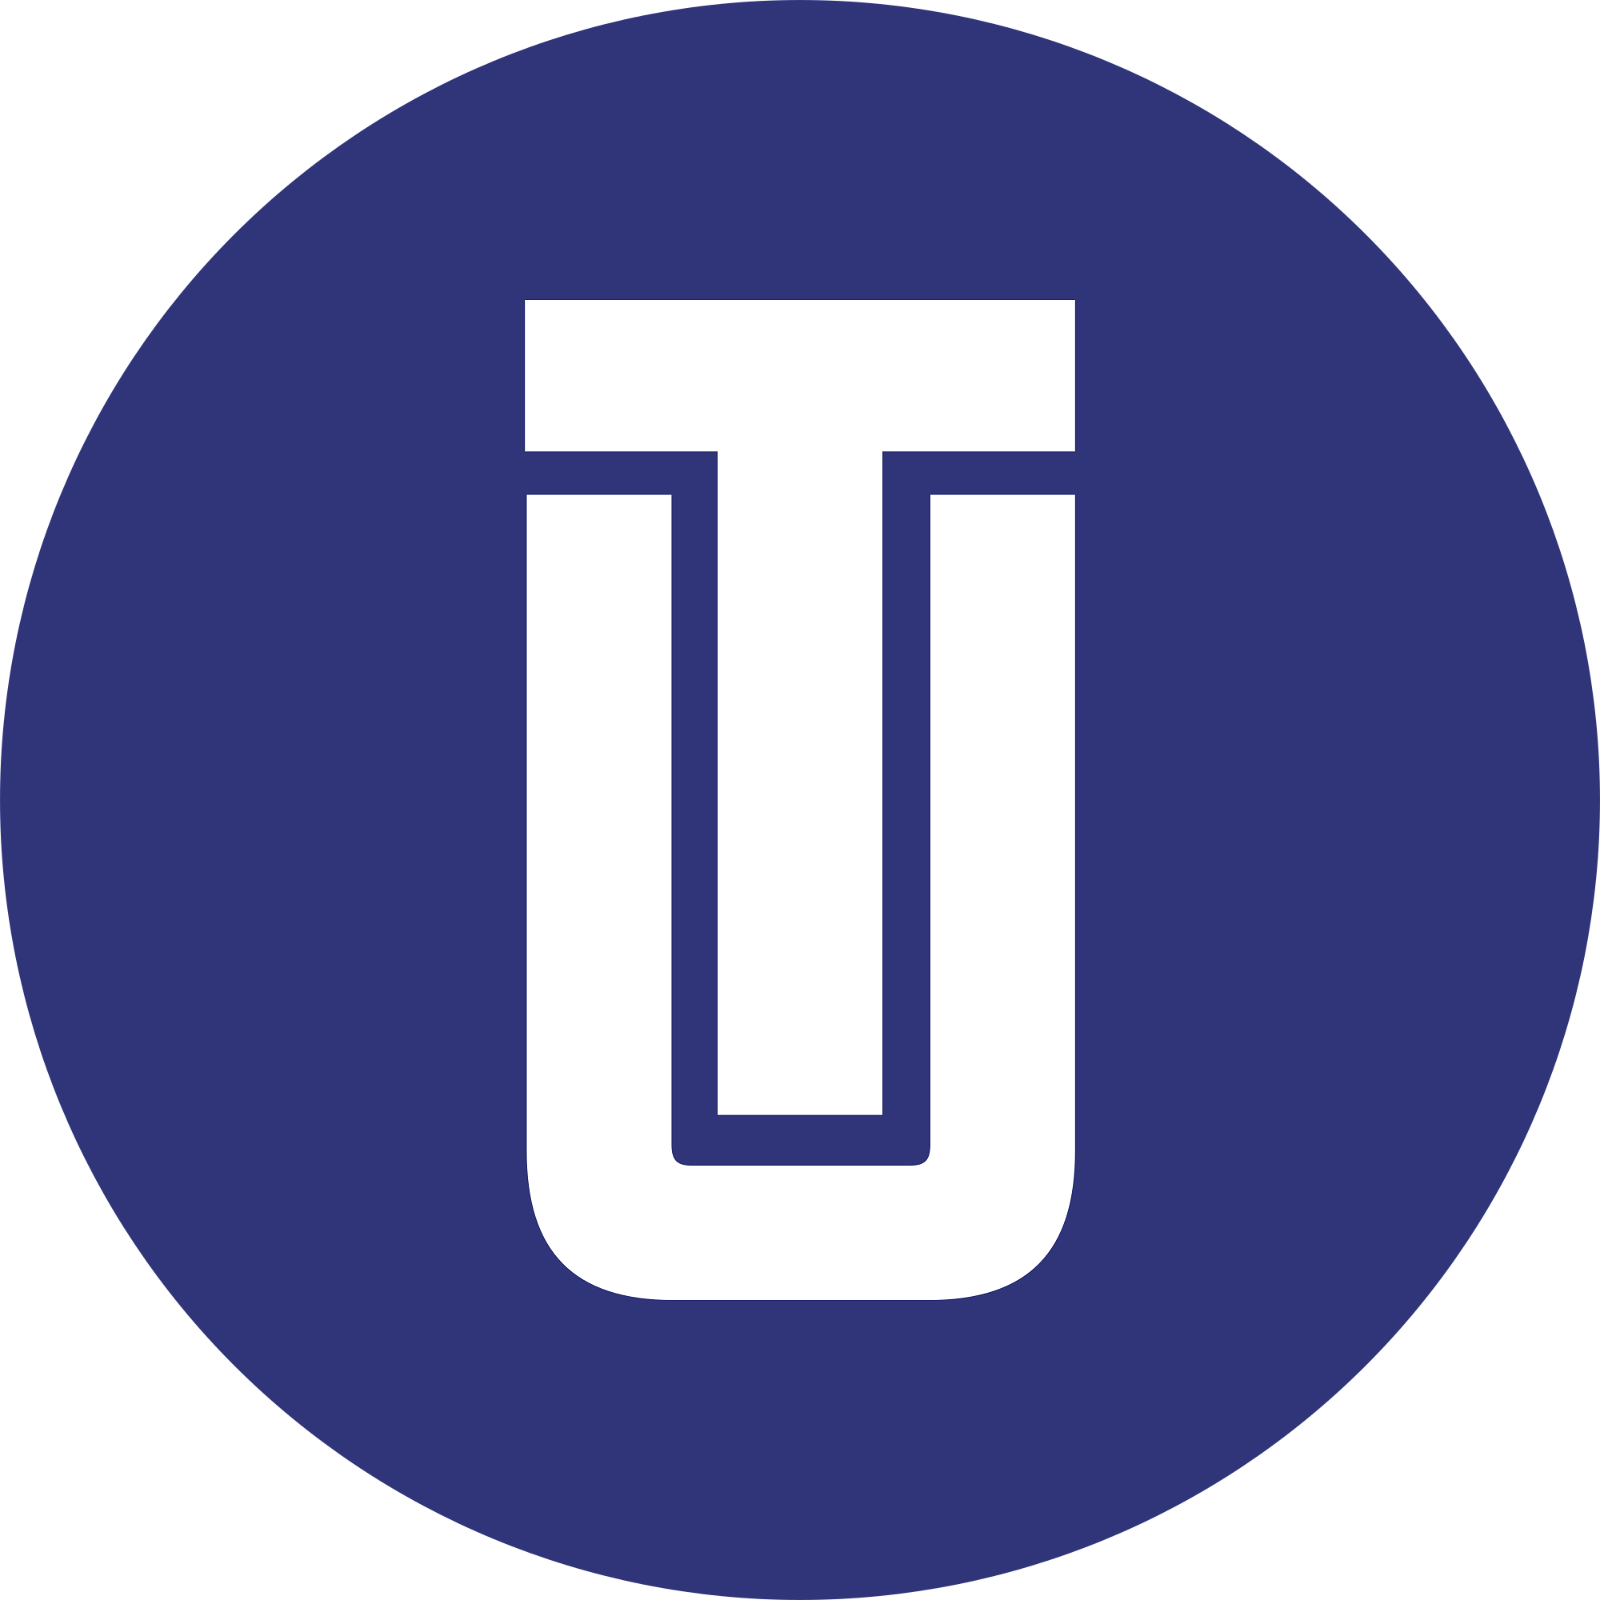 Utrust Logo